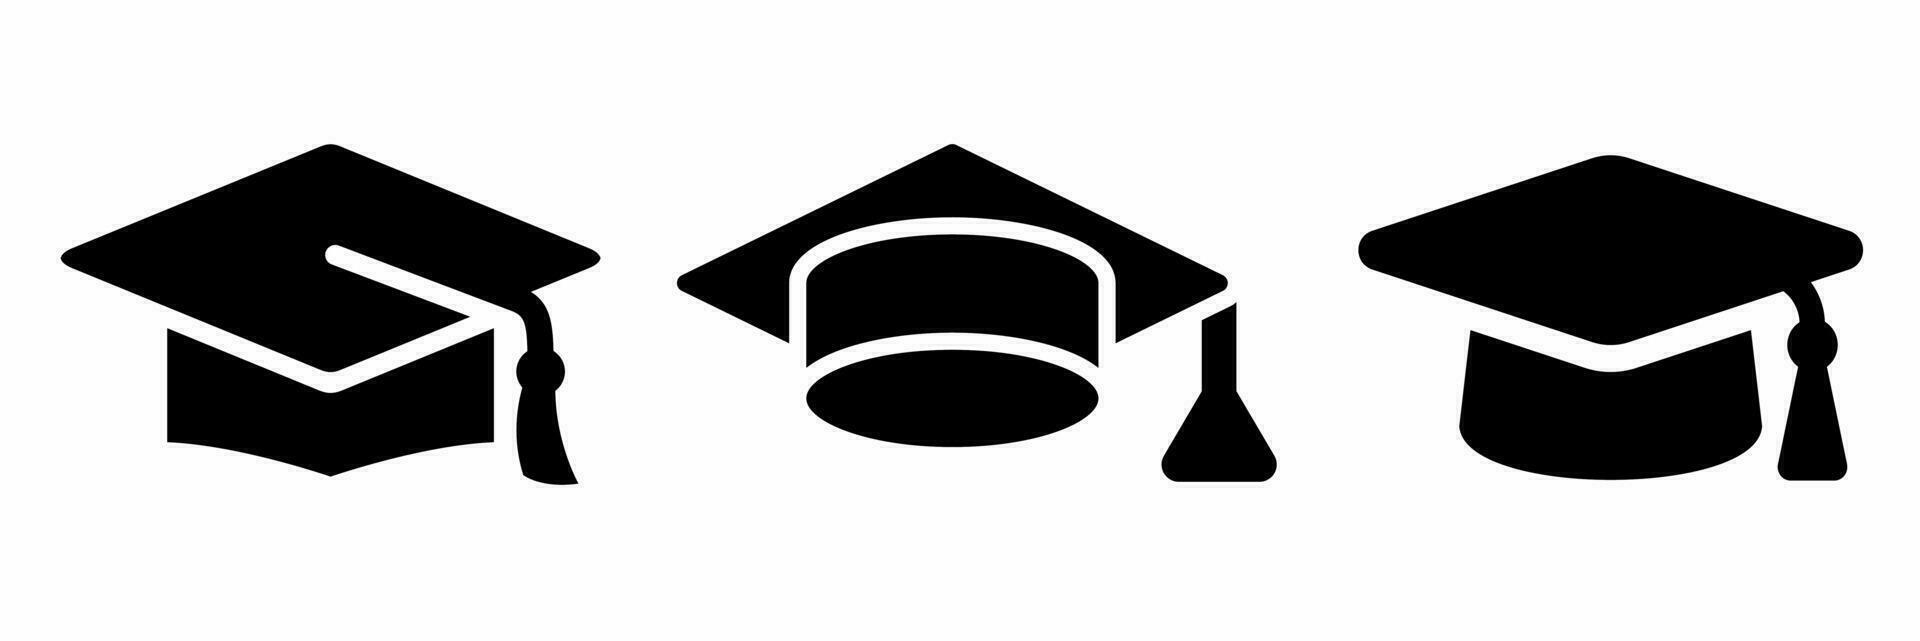 Graduation hat icon black white illustration collection. vector